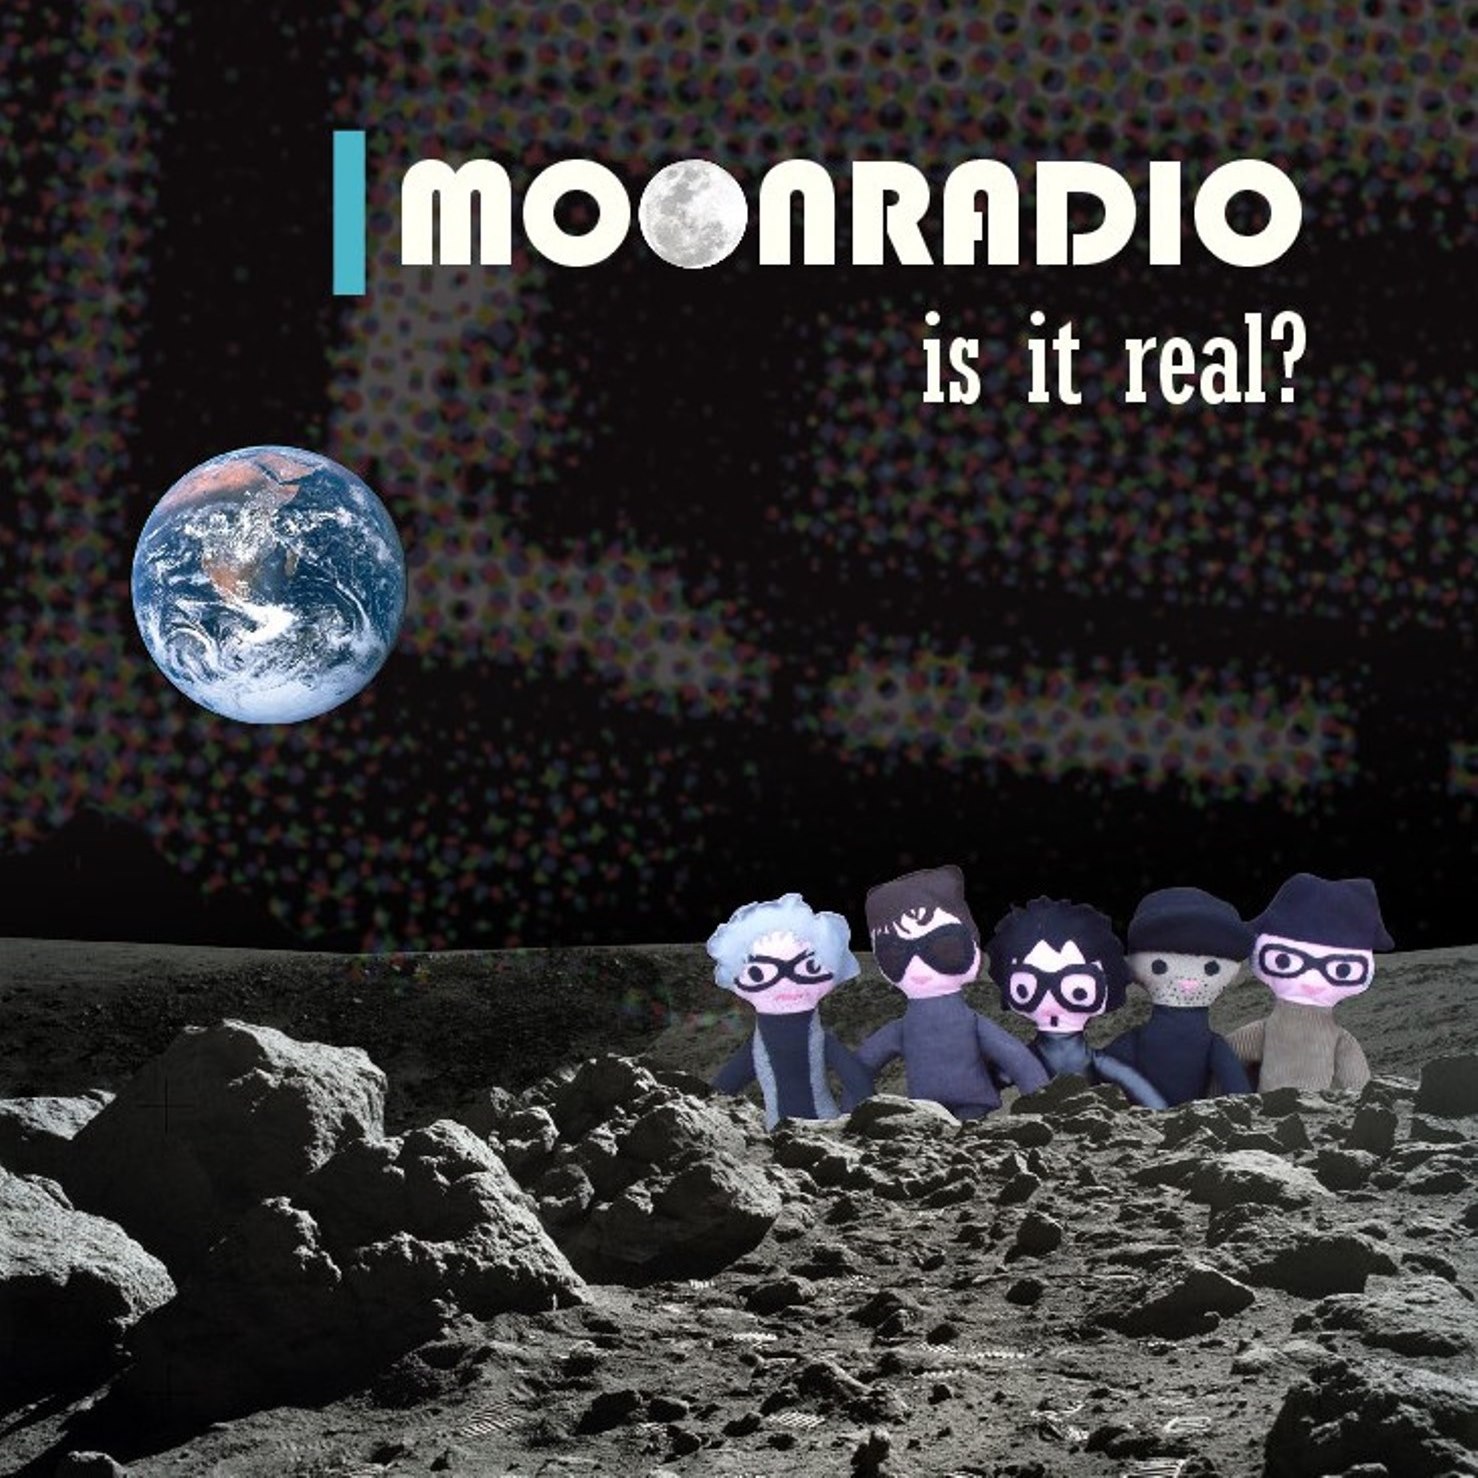 Moonradio